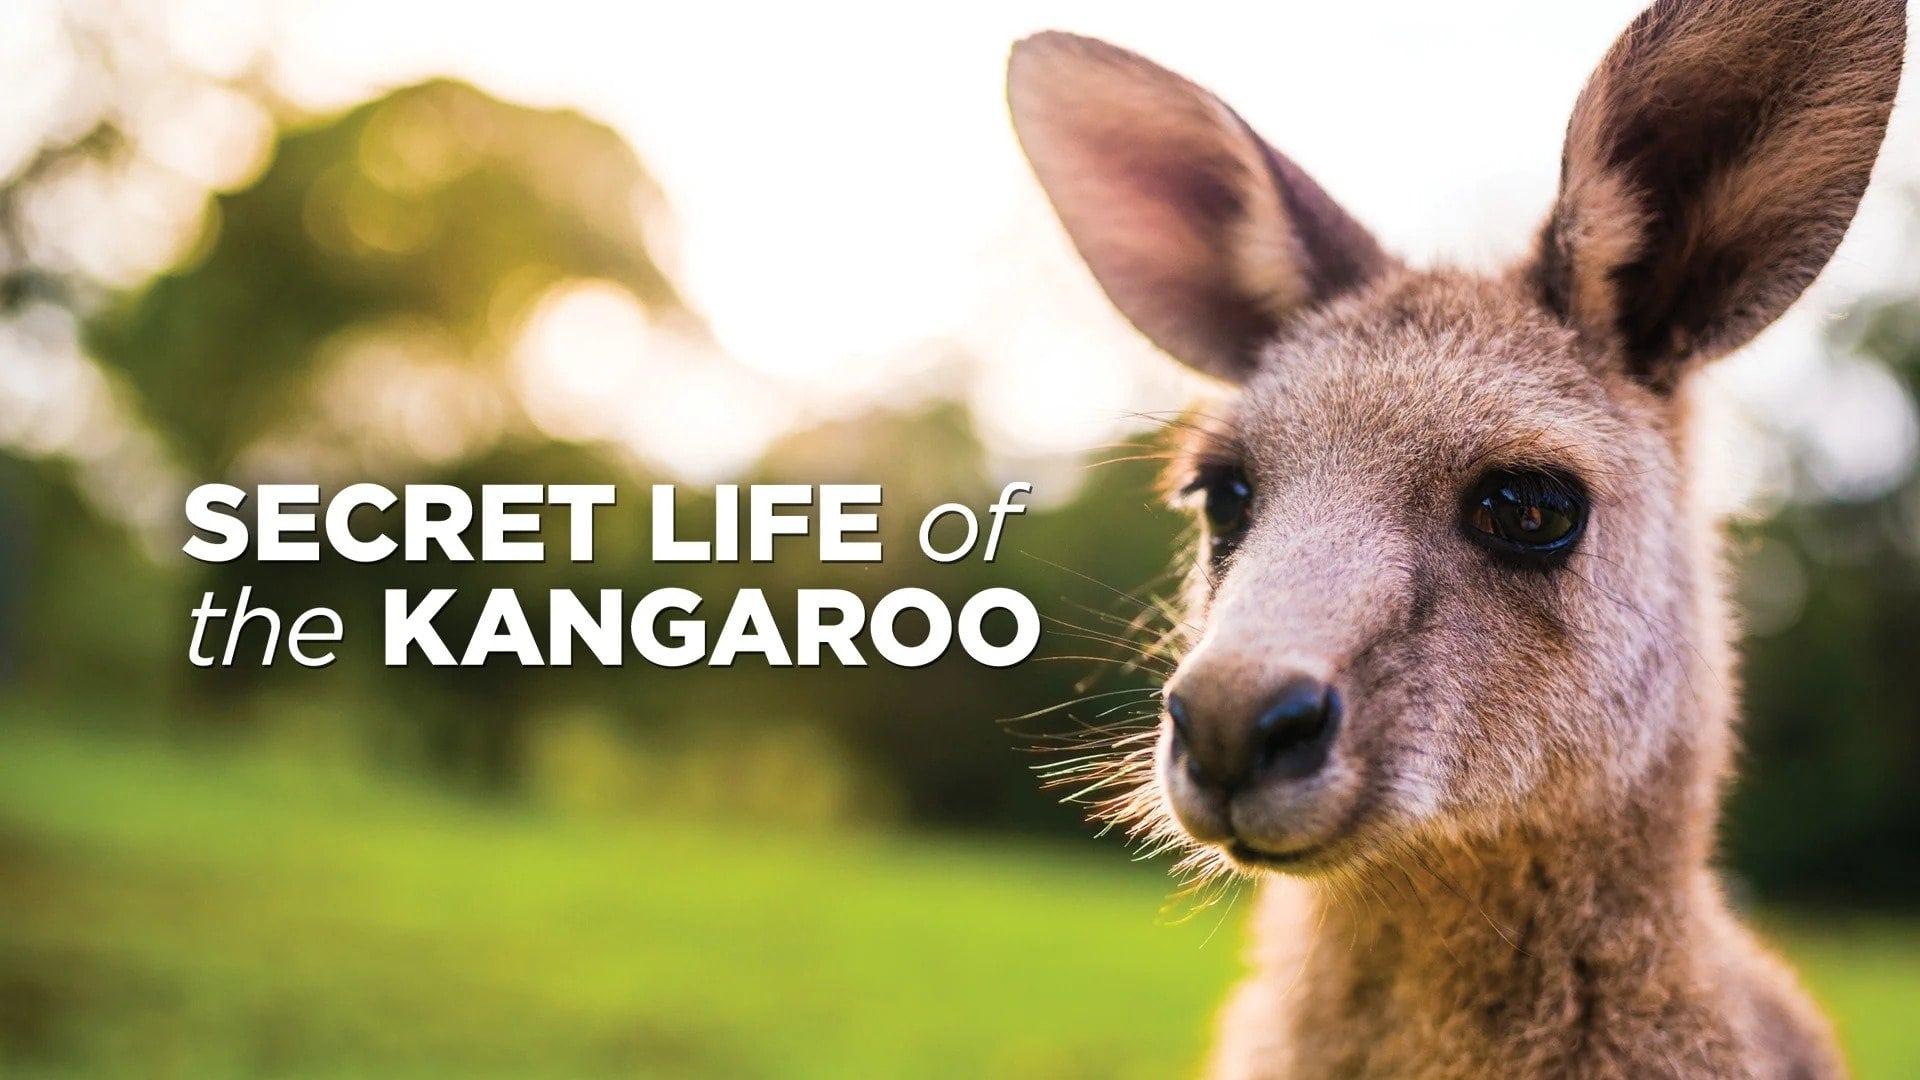 Secret Life of the Kangaroo backdrop